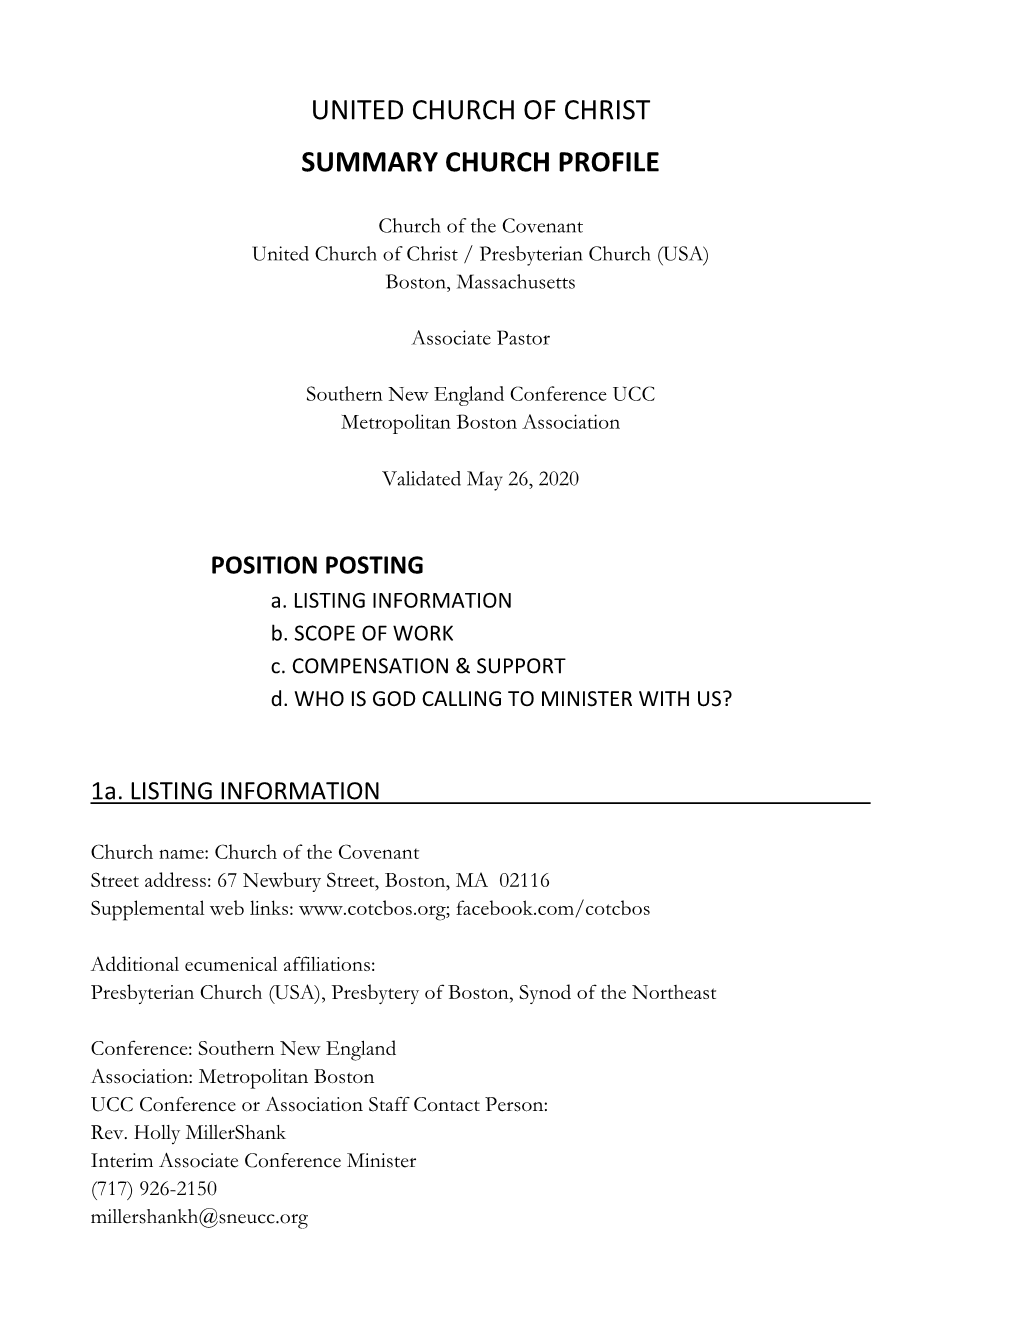 United Church of Christ Summary Church Profile